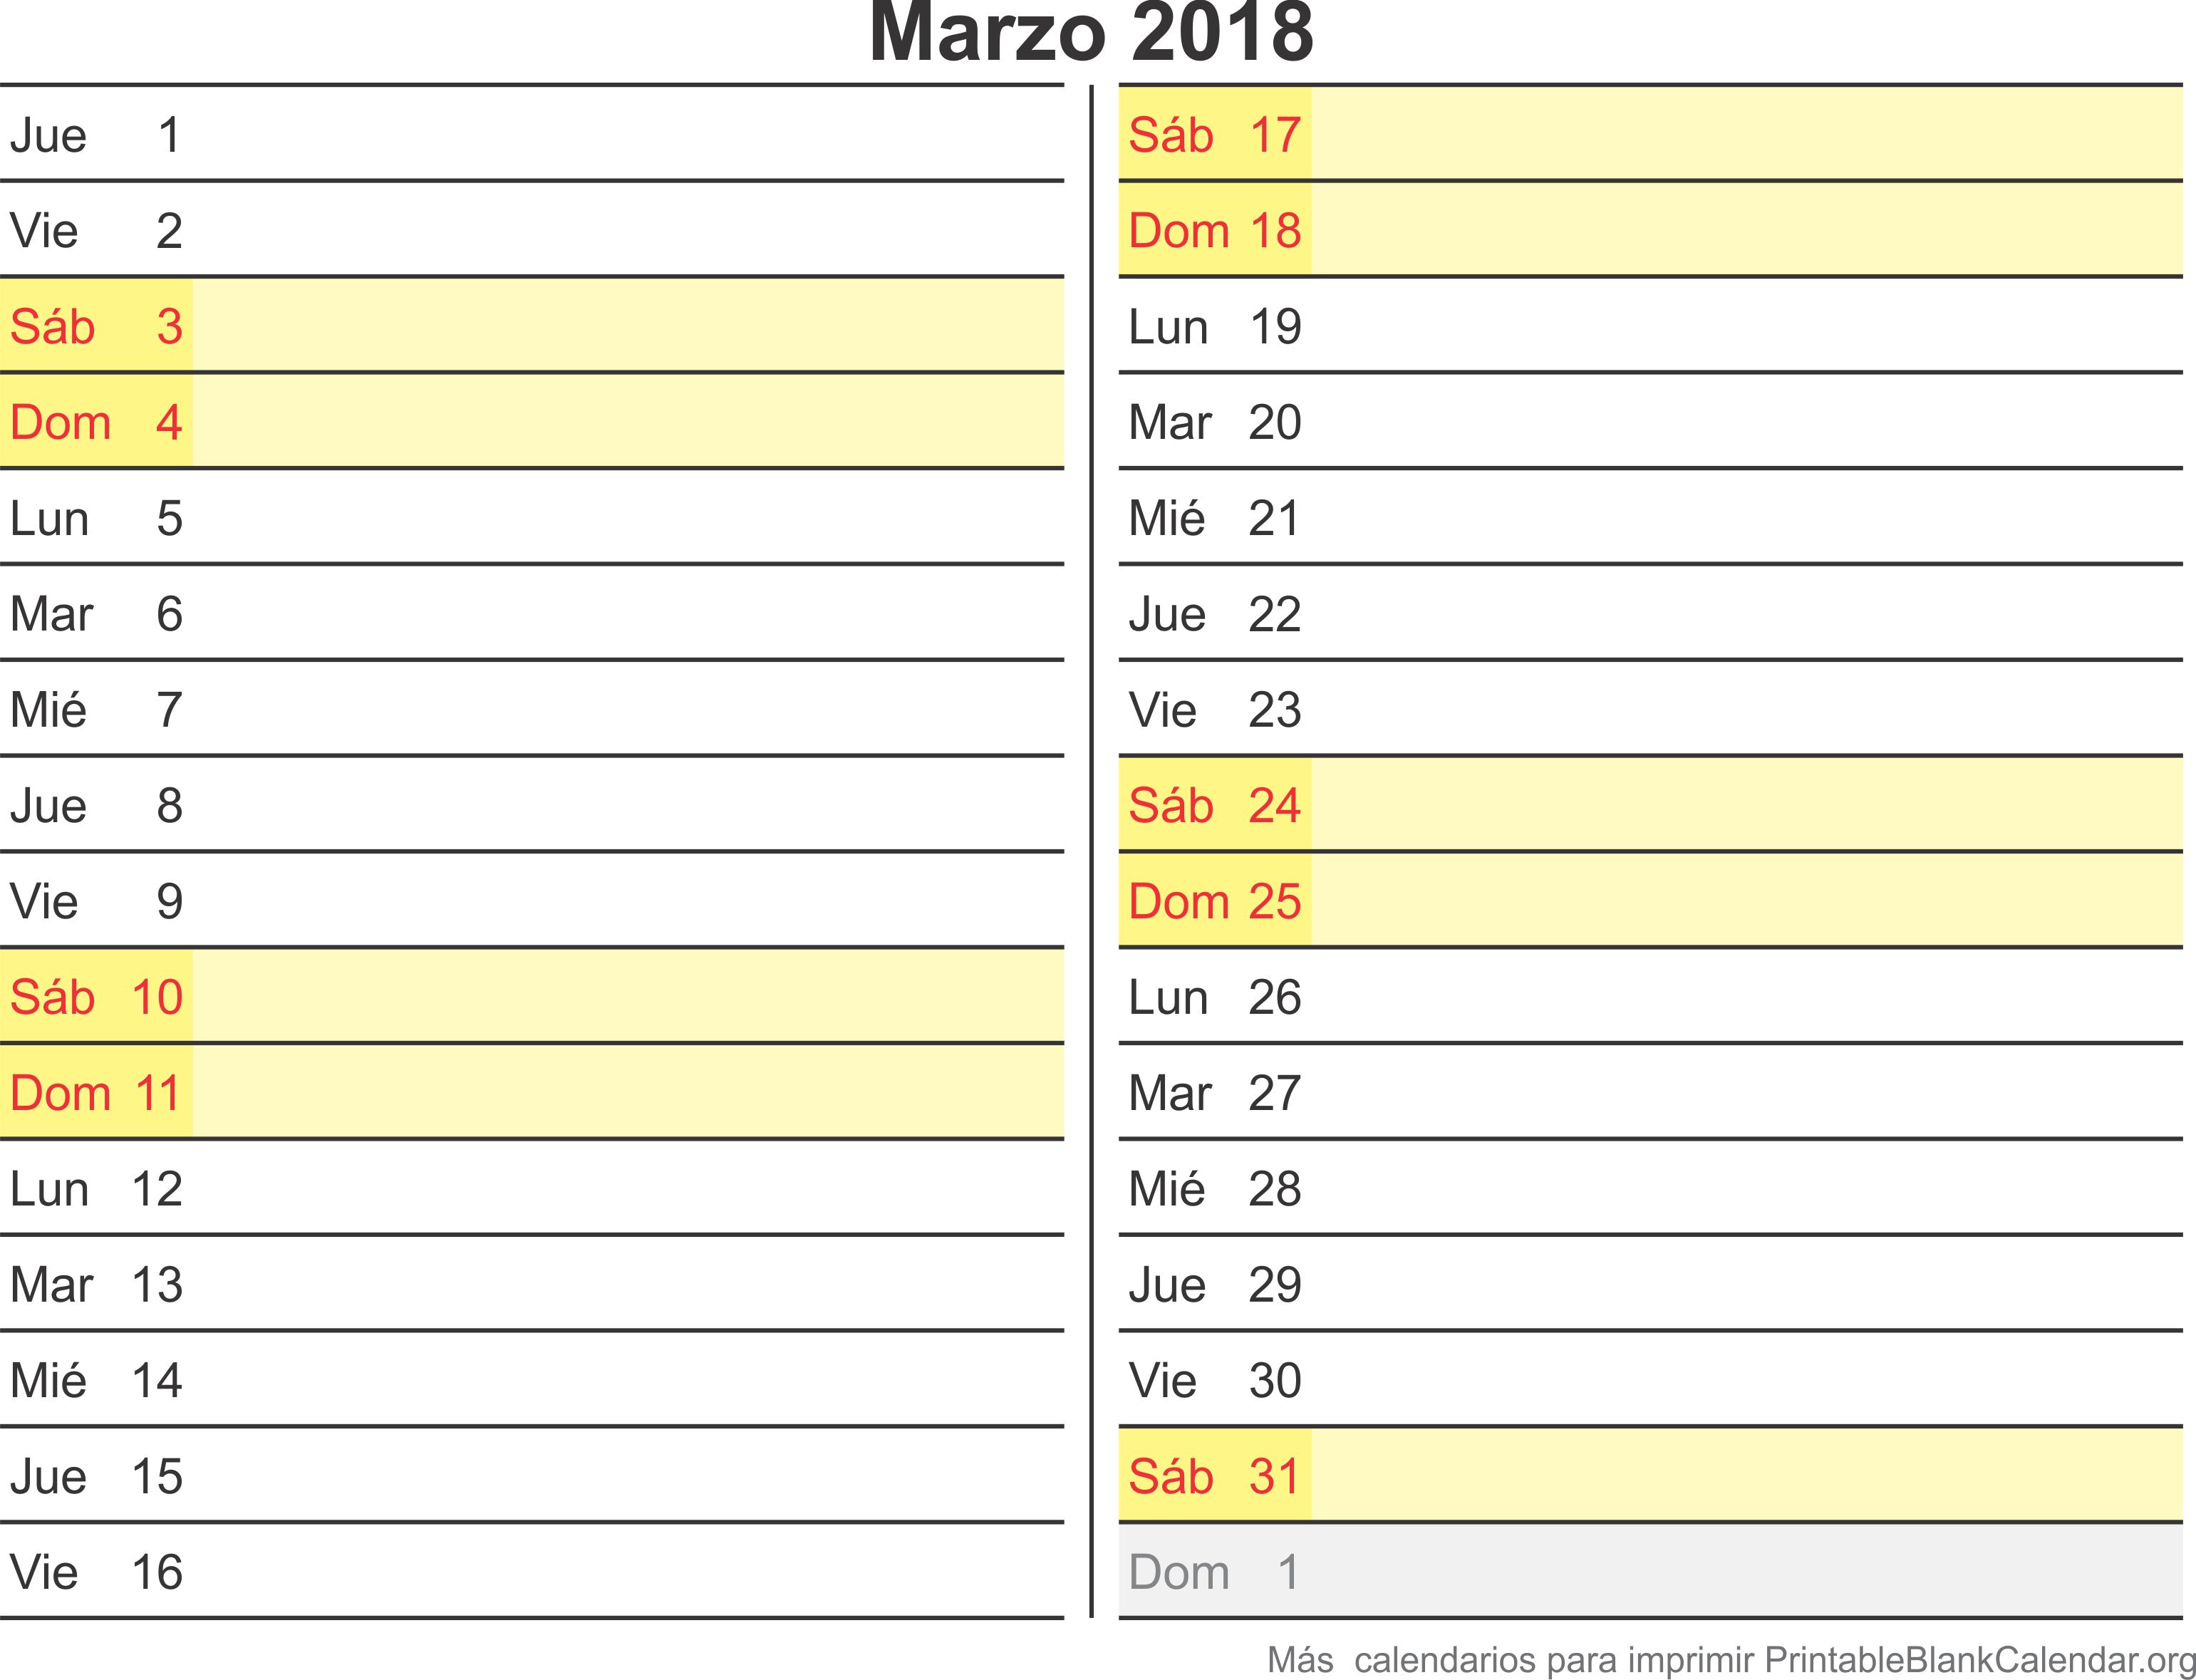 calendario para imprimir mar 2018